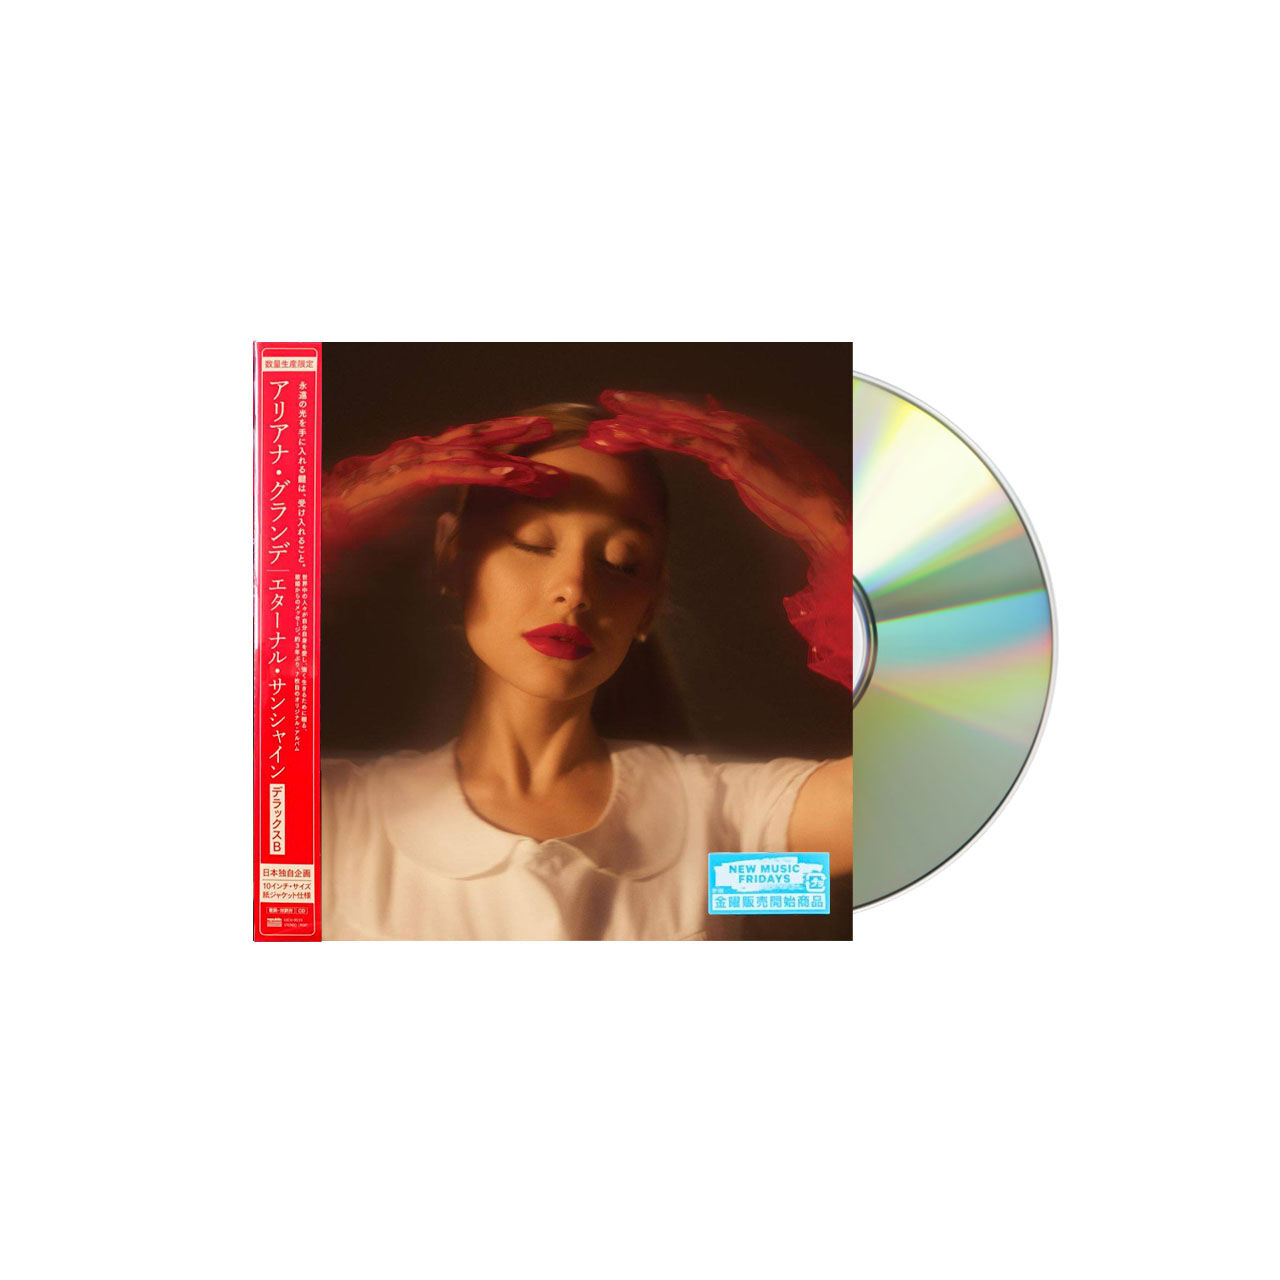 ARIANA GRANDE Eternal Sunshine Deluxe Cover B 10 Inch CD JP